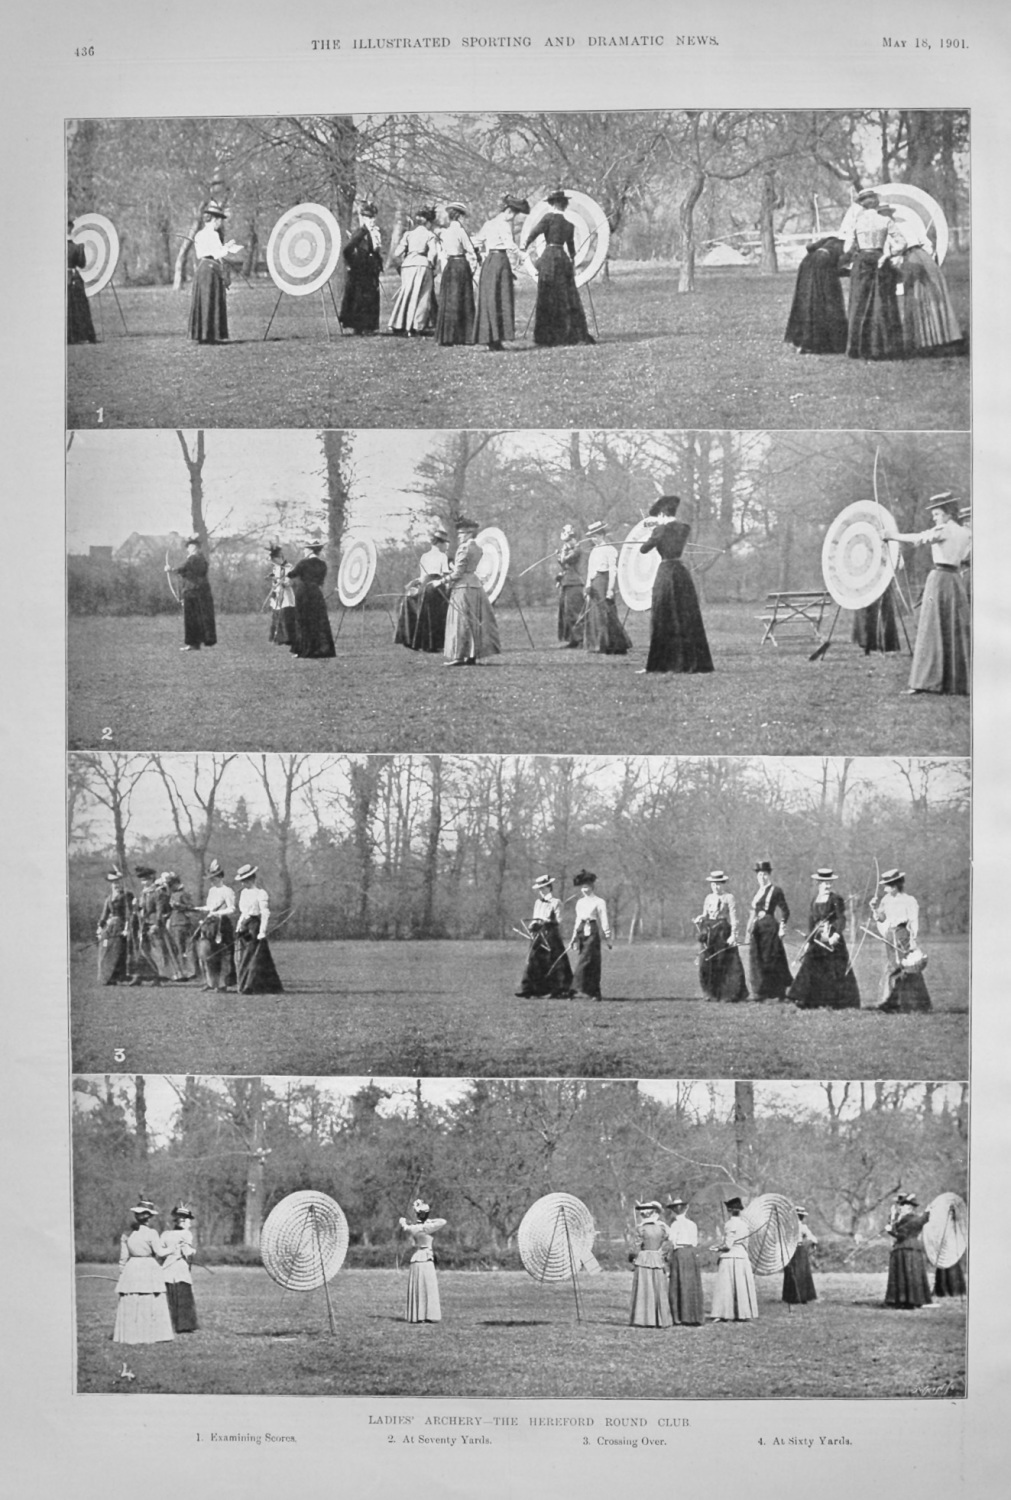 Ladies' Archery- The Hereford Round Club.  1901.